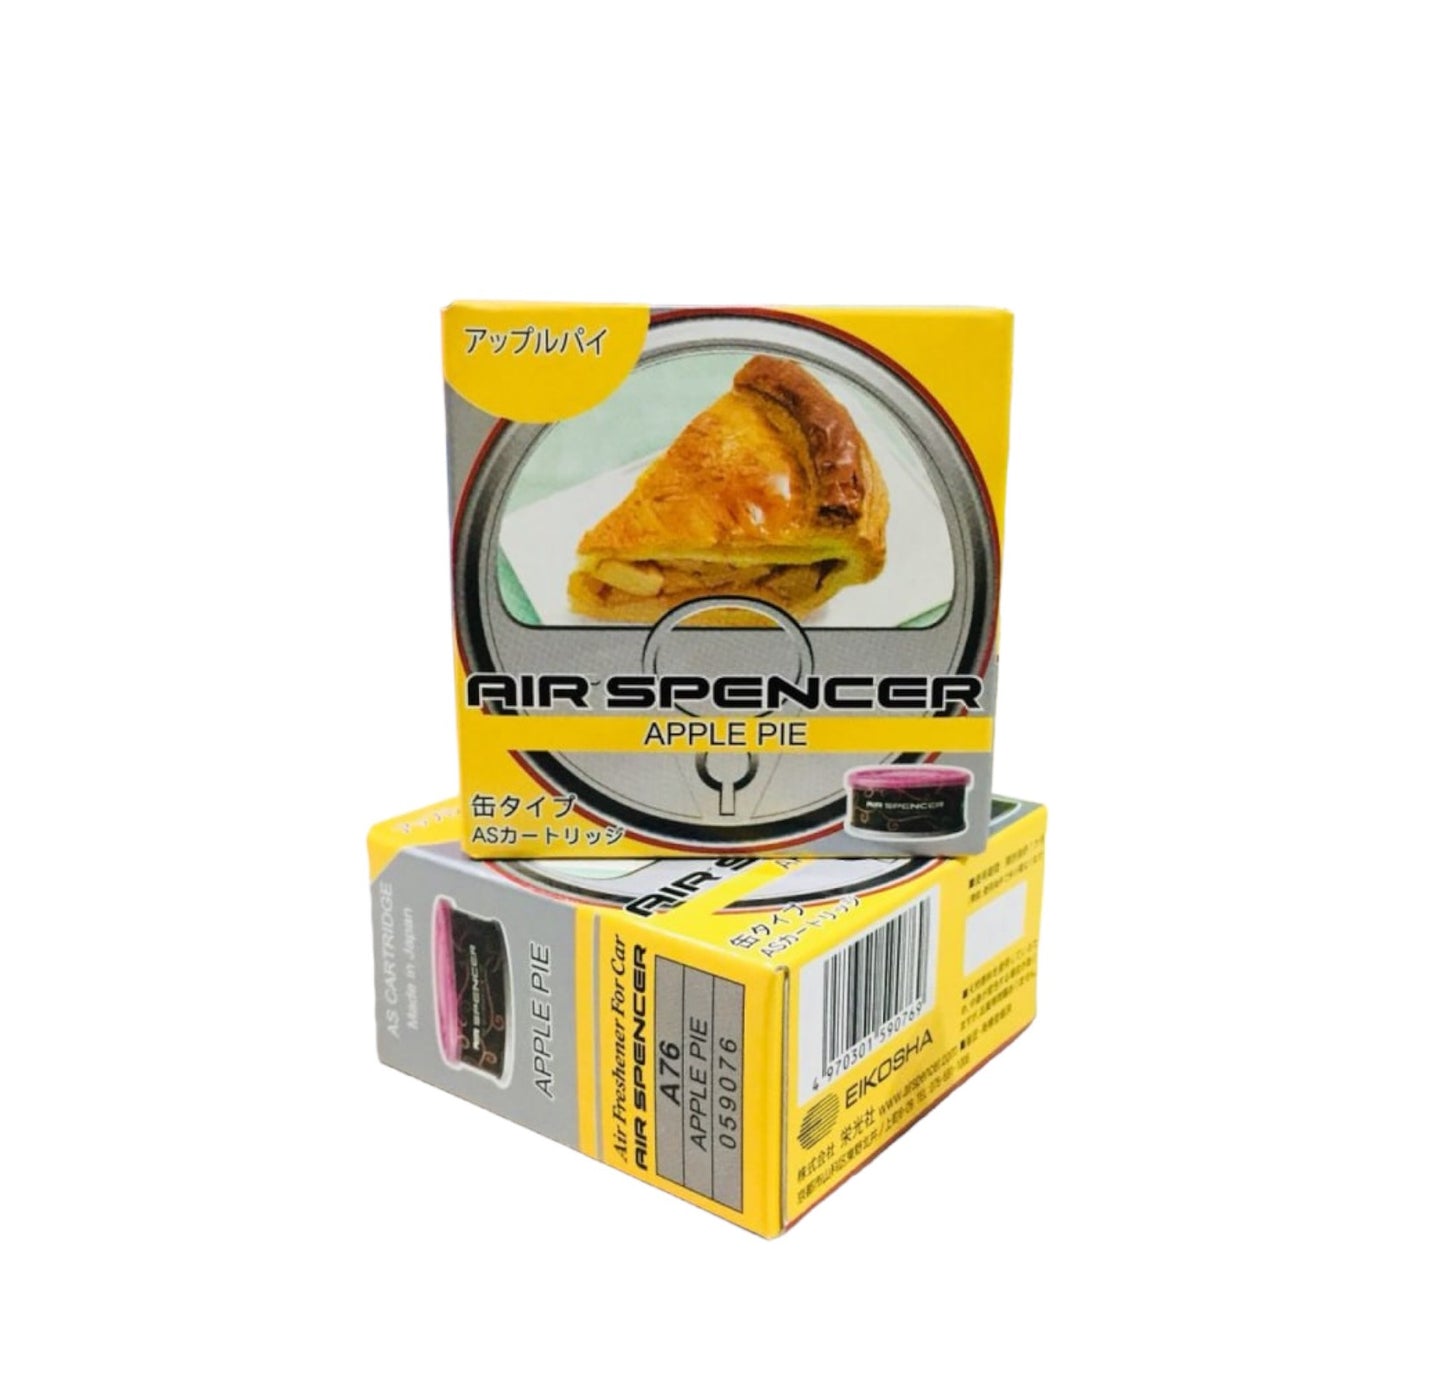 Air Spencer Air Freshener - Apple Pie